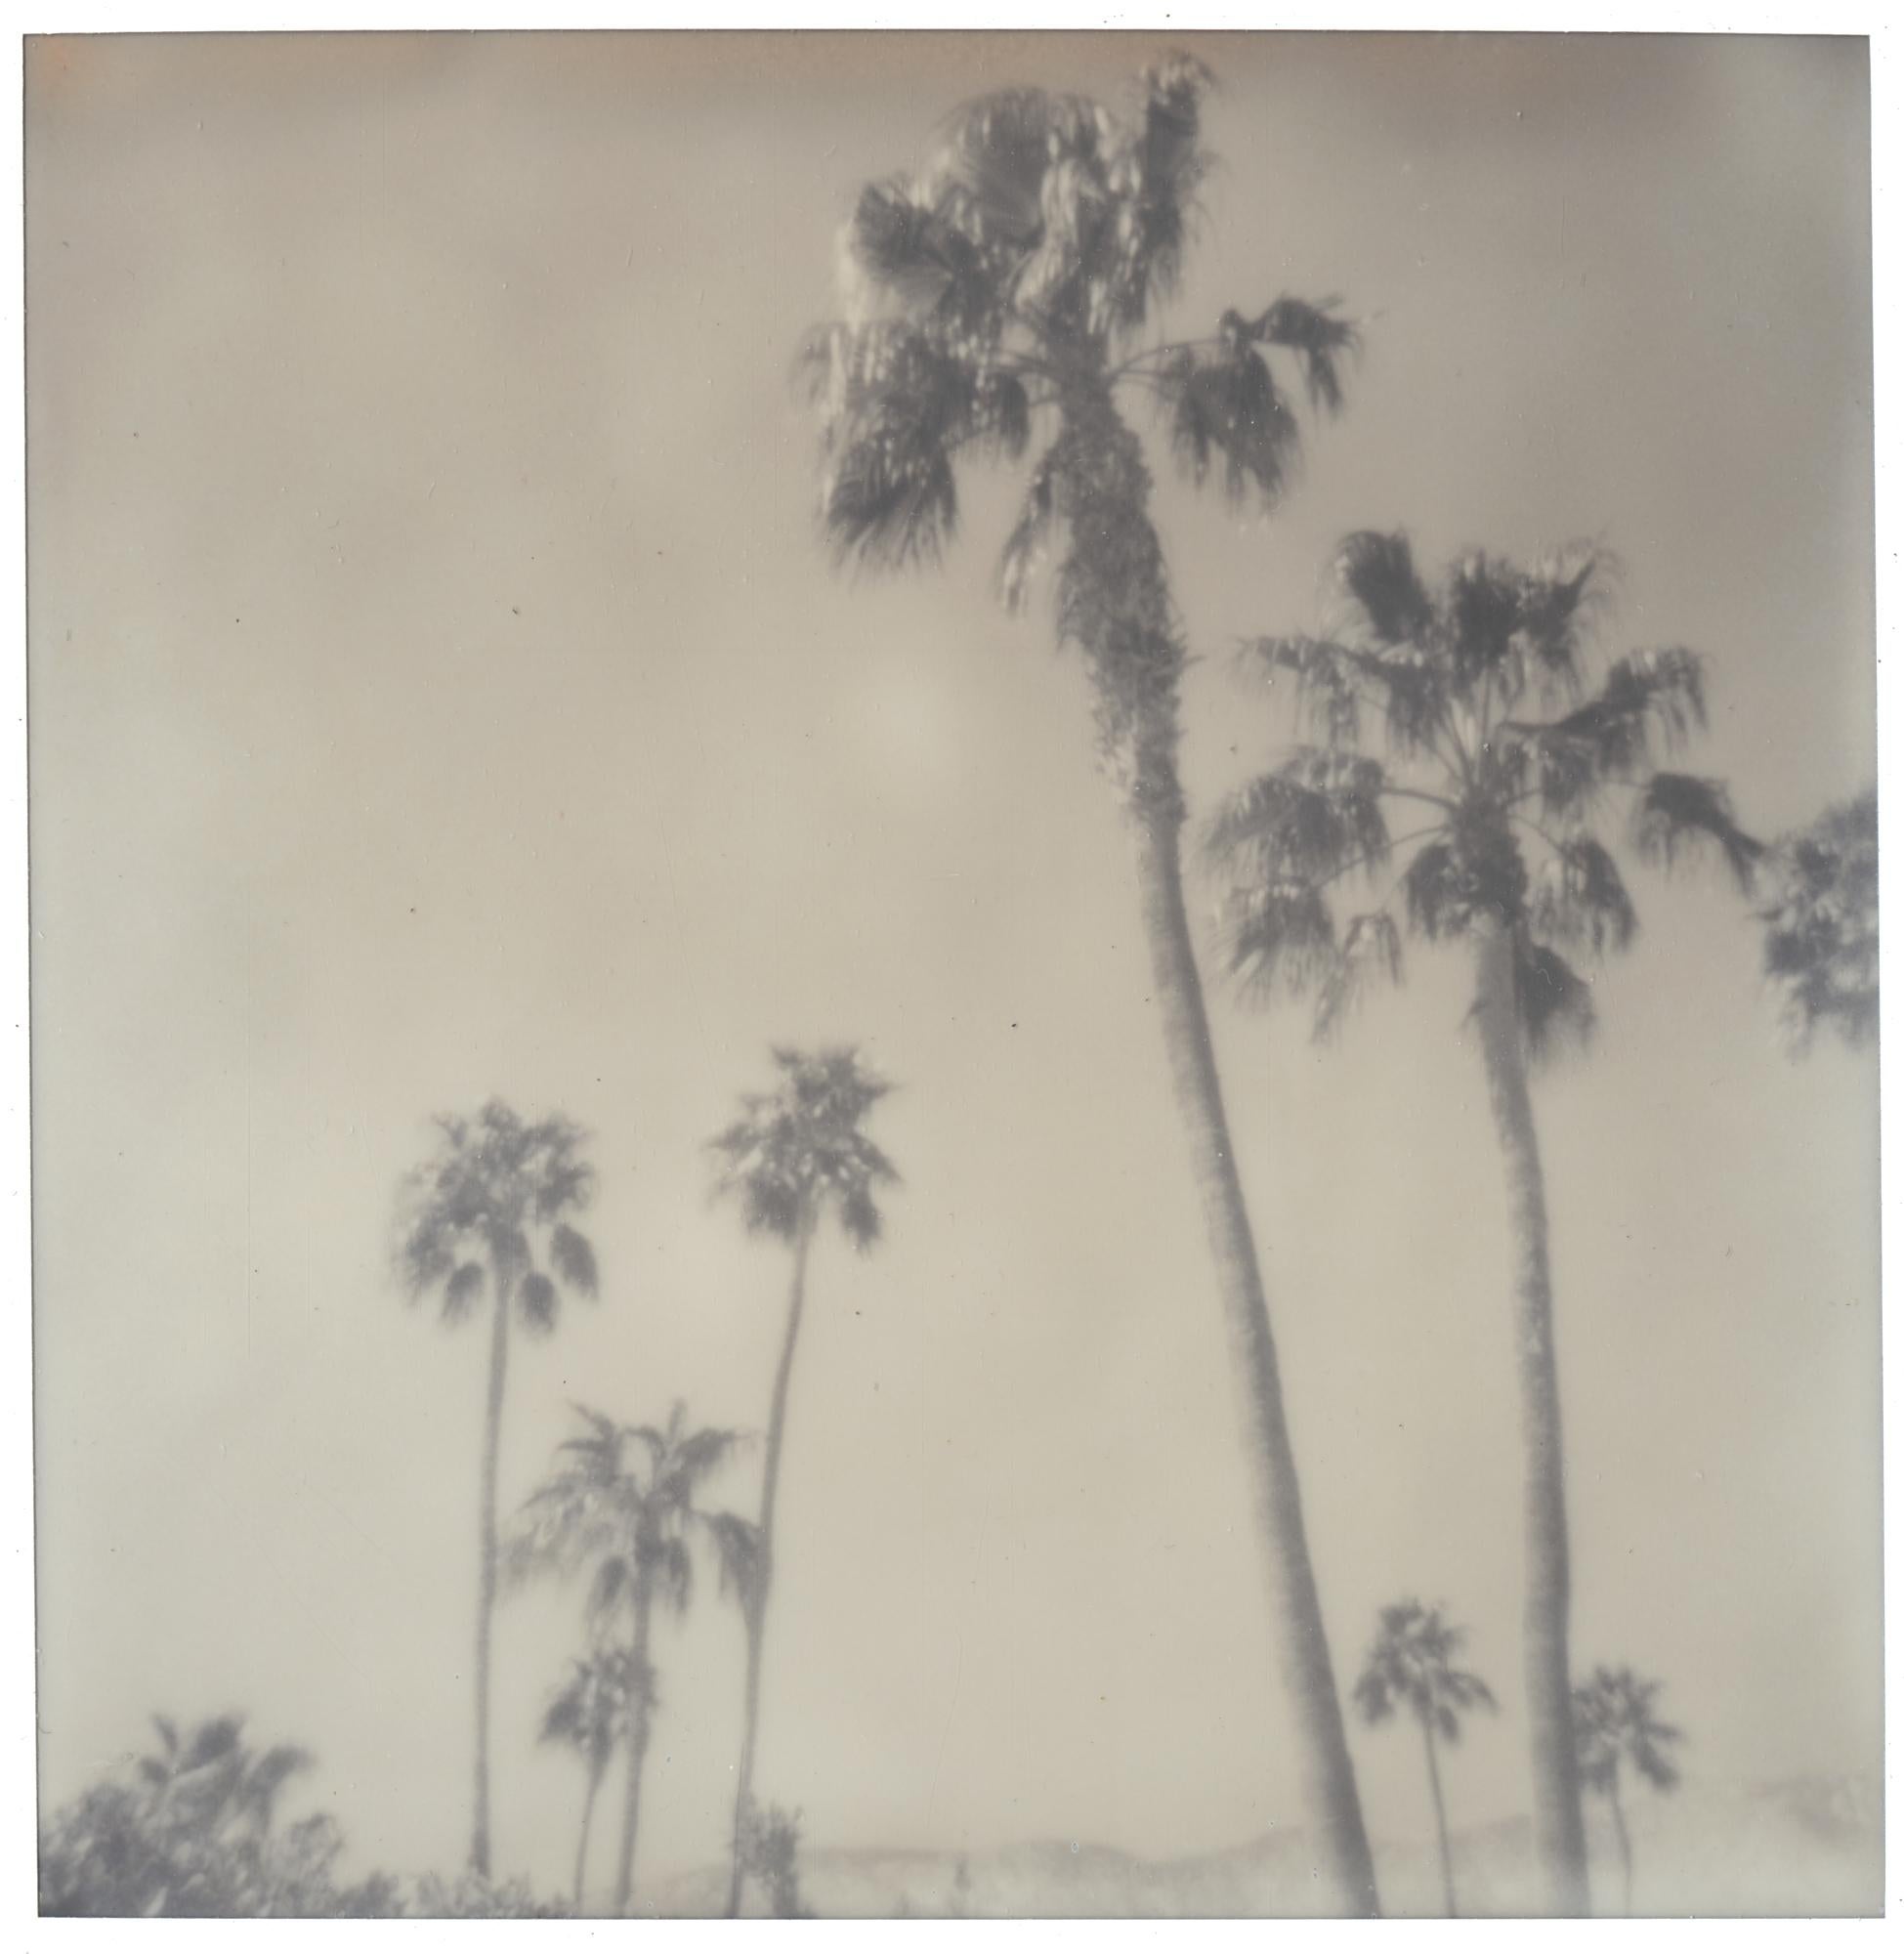 Palm Springs Palm Trees (Californication) - Polaroïd